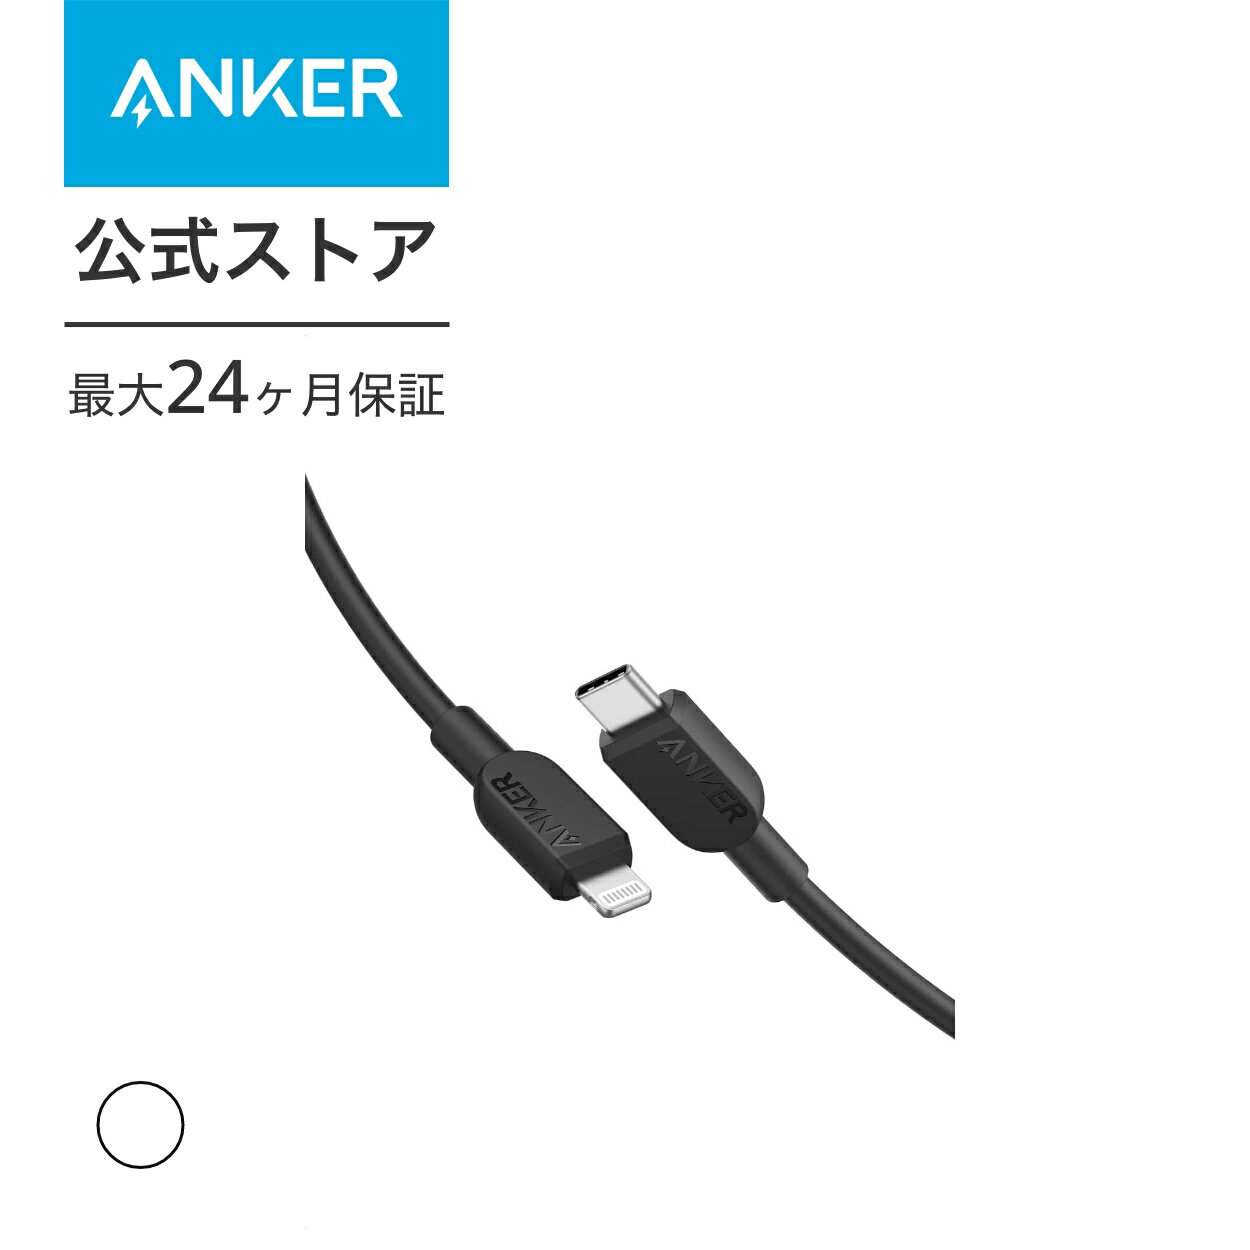 Anker 310 USB-C & ライトニング ケーブル 